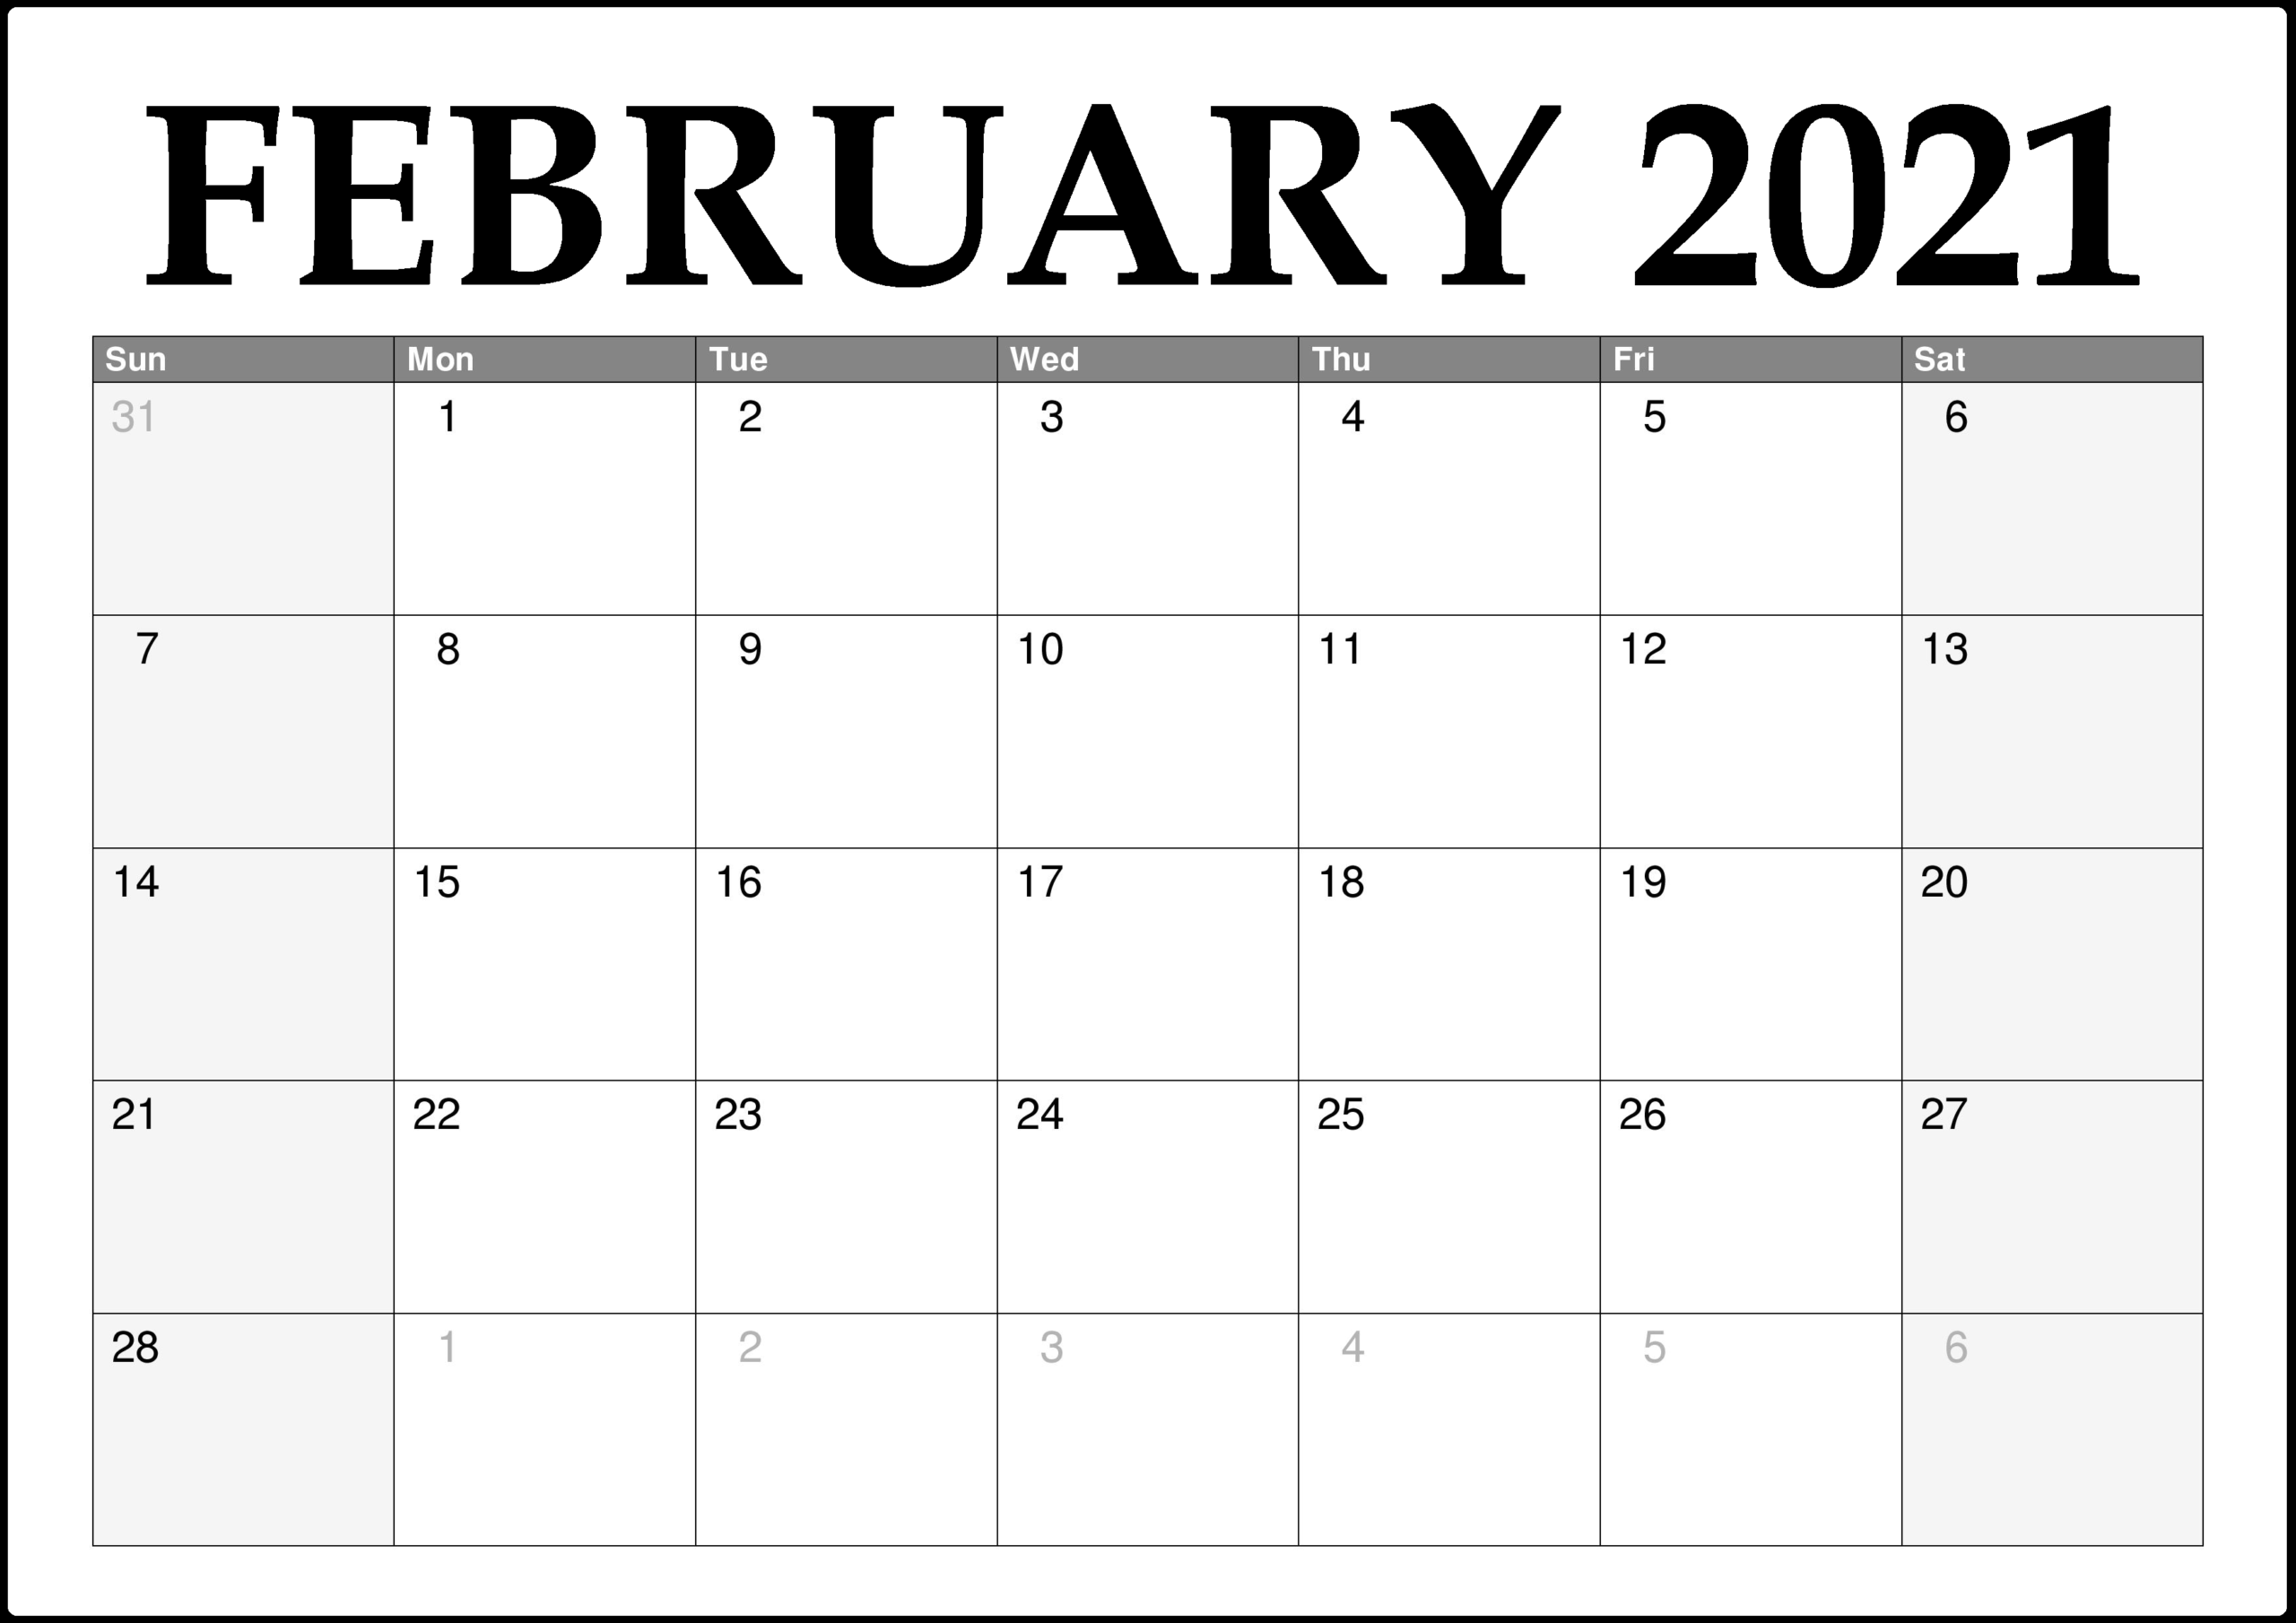 February 2021 Calendar With Holidays - Printable Calendar-February 2021 Calendar